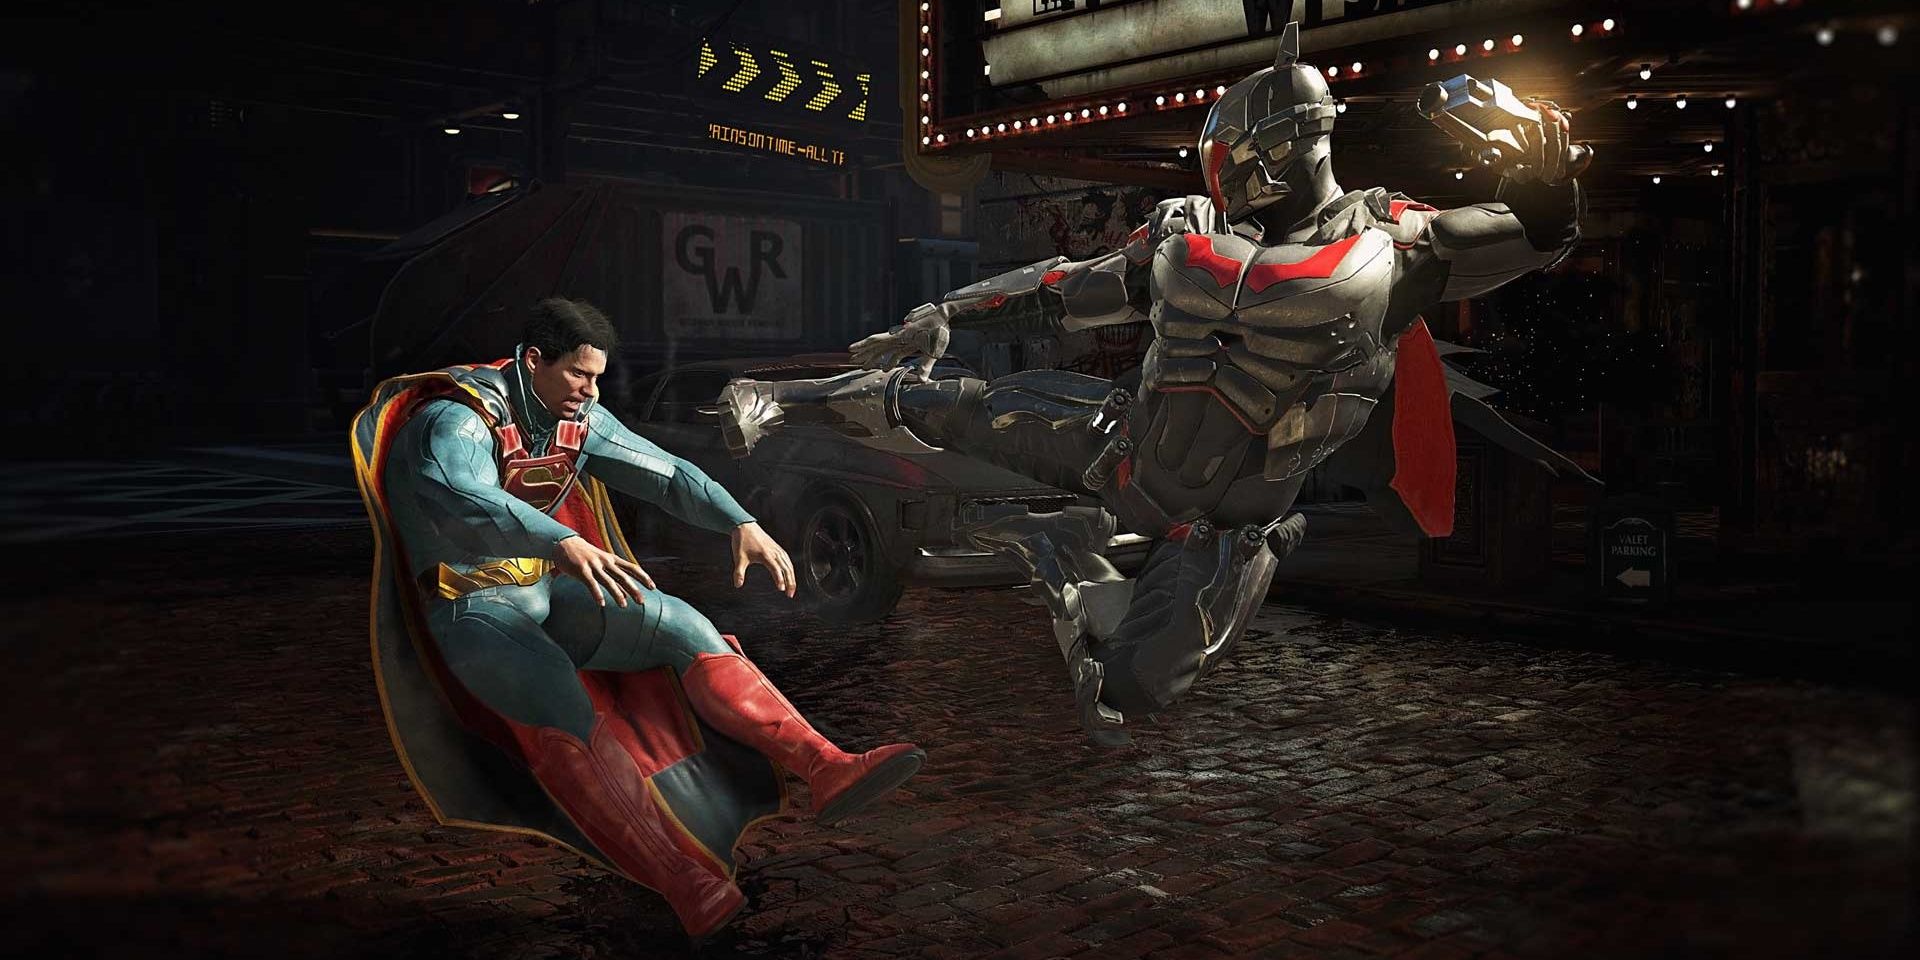 Batman kicking Superman in Injustice 2